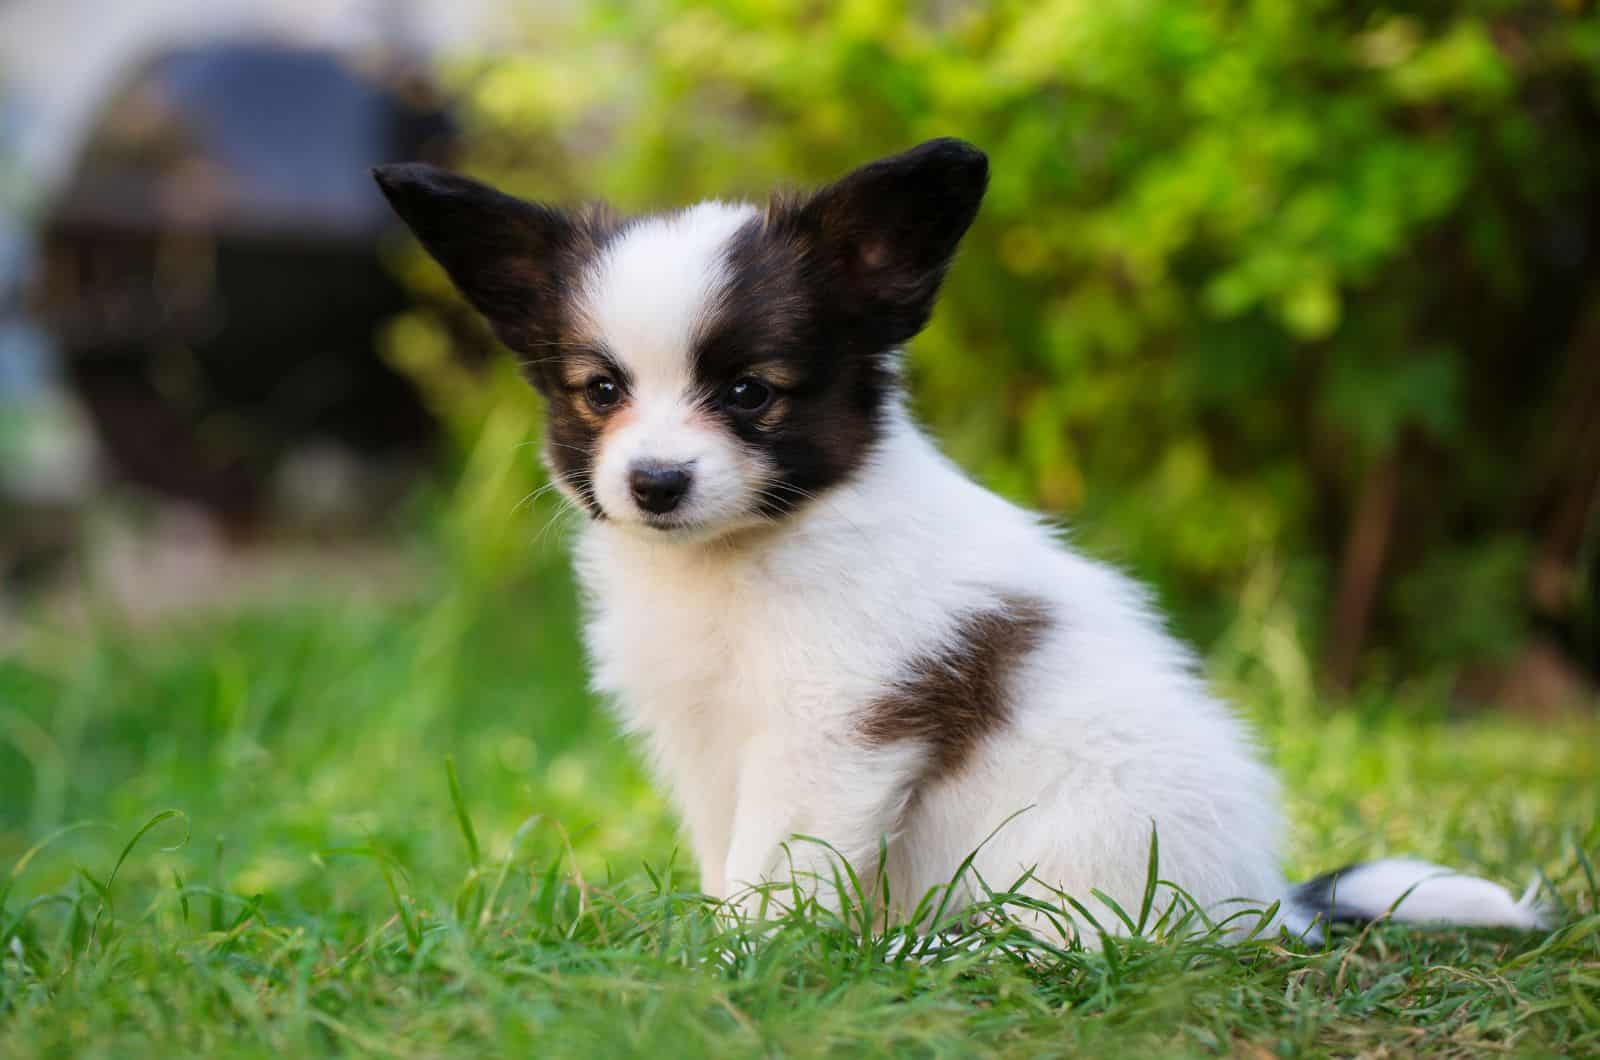 cute puppy sitting on grass